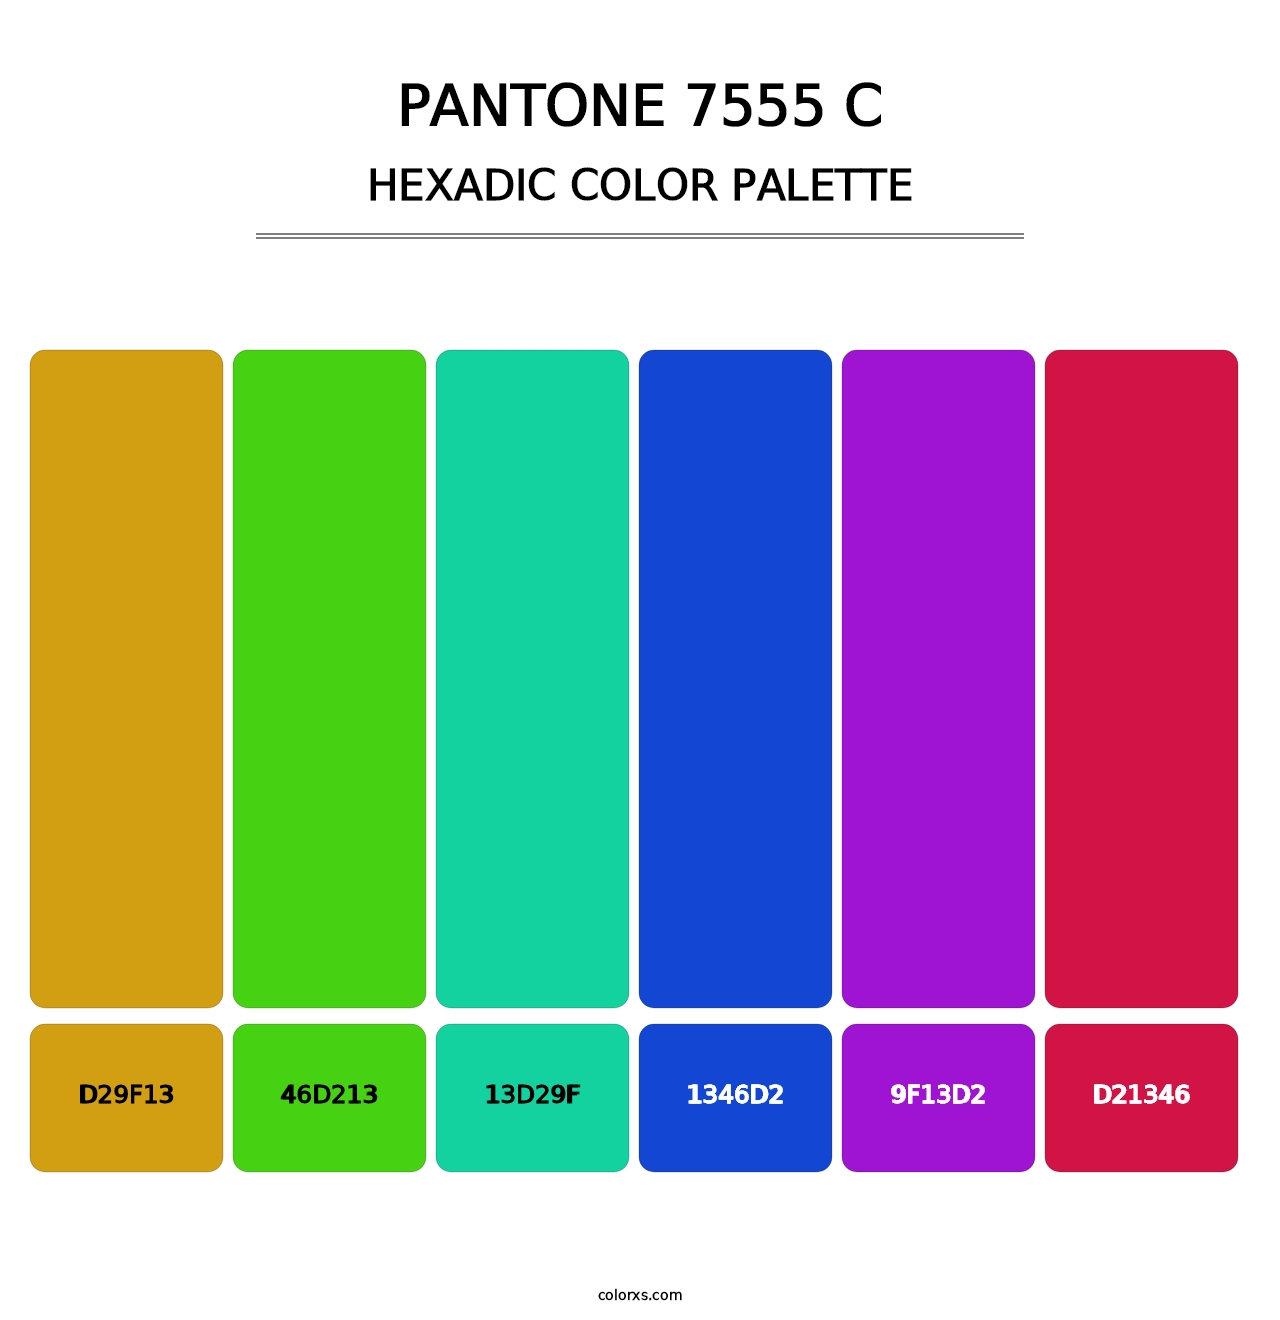 PANTONE 7555 C - Hexadic Color Palette